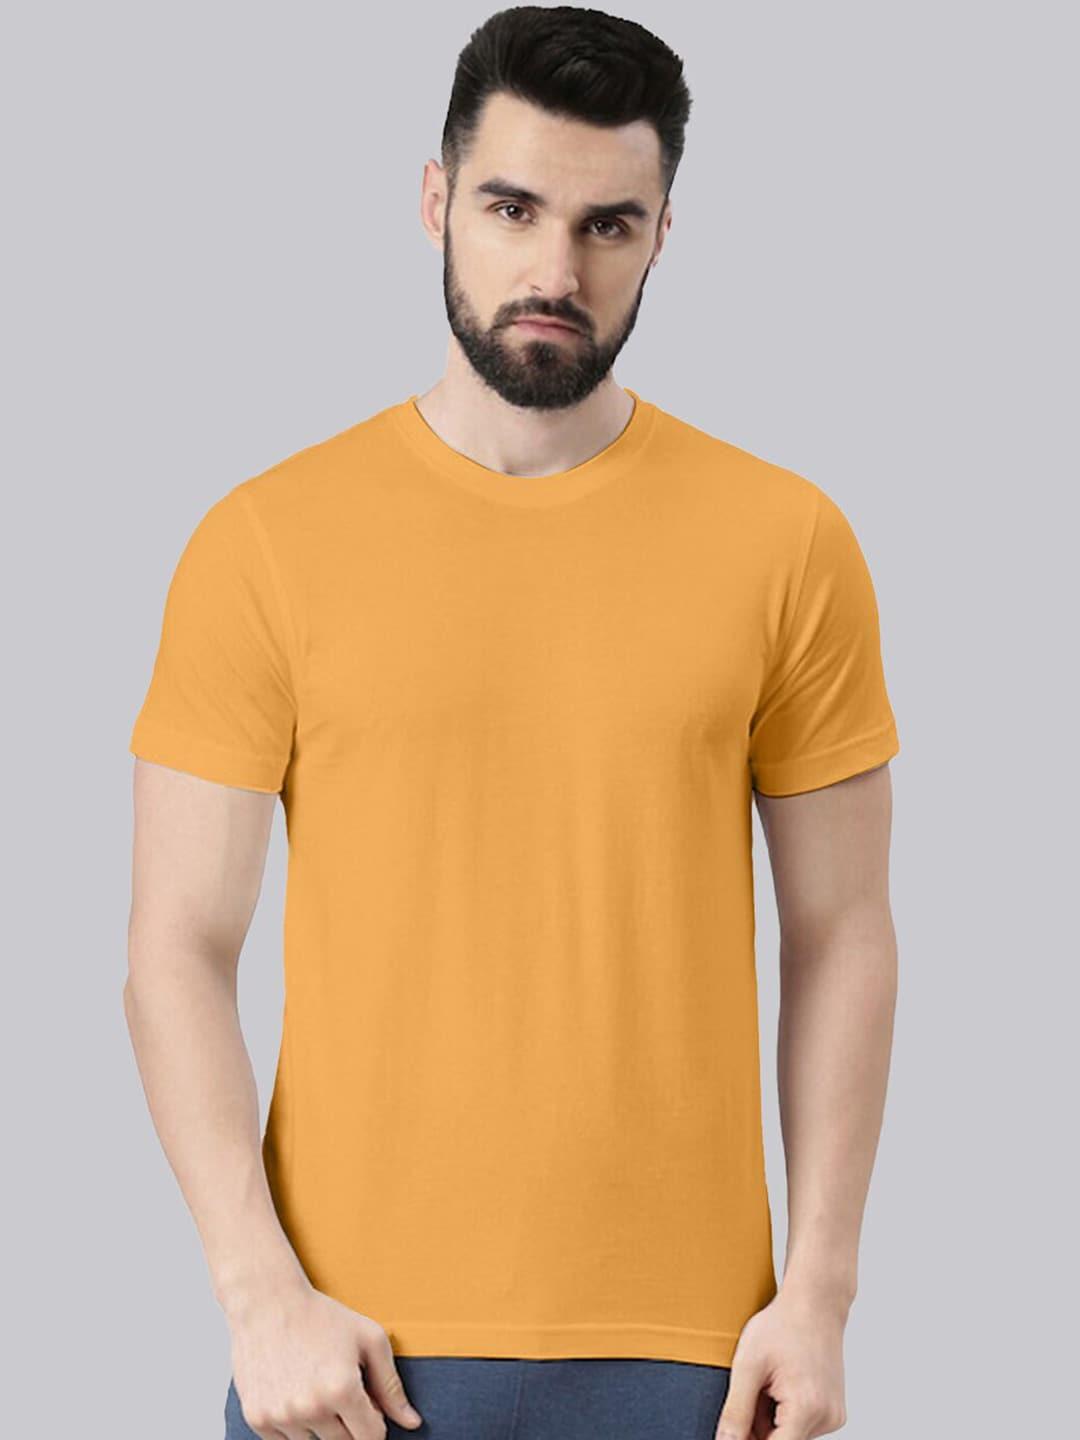 veirdo-short-sleeves-pure-cotton-t-shirt